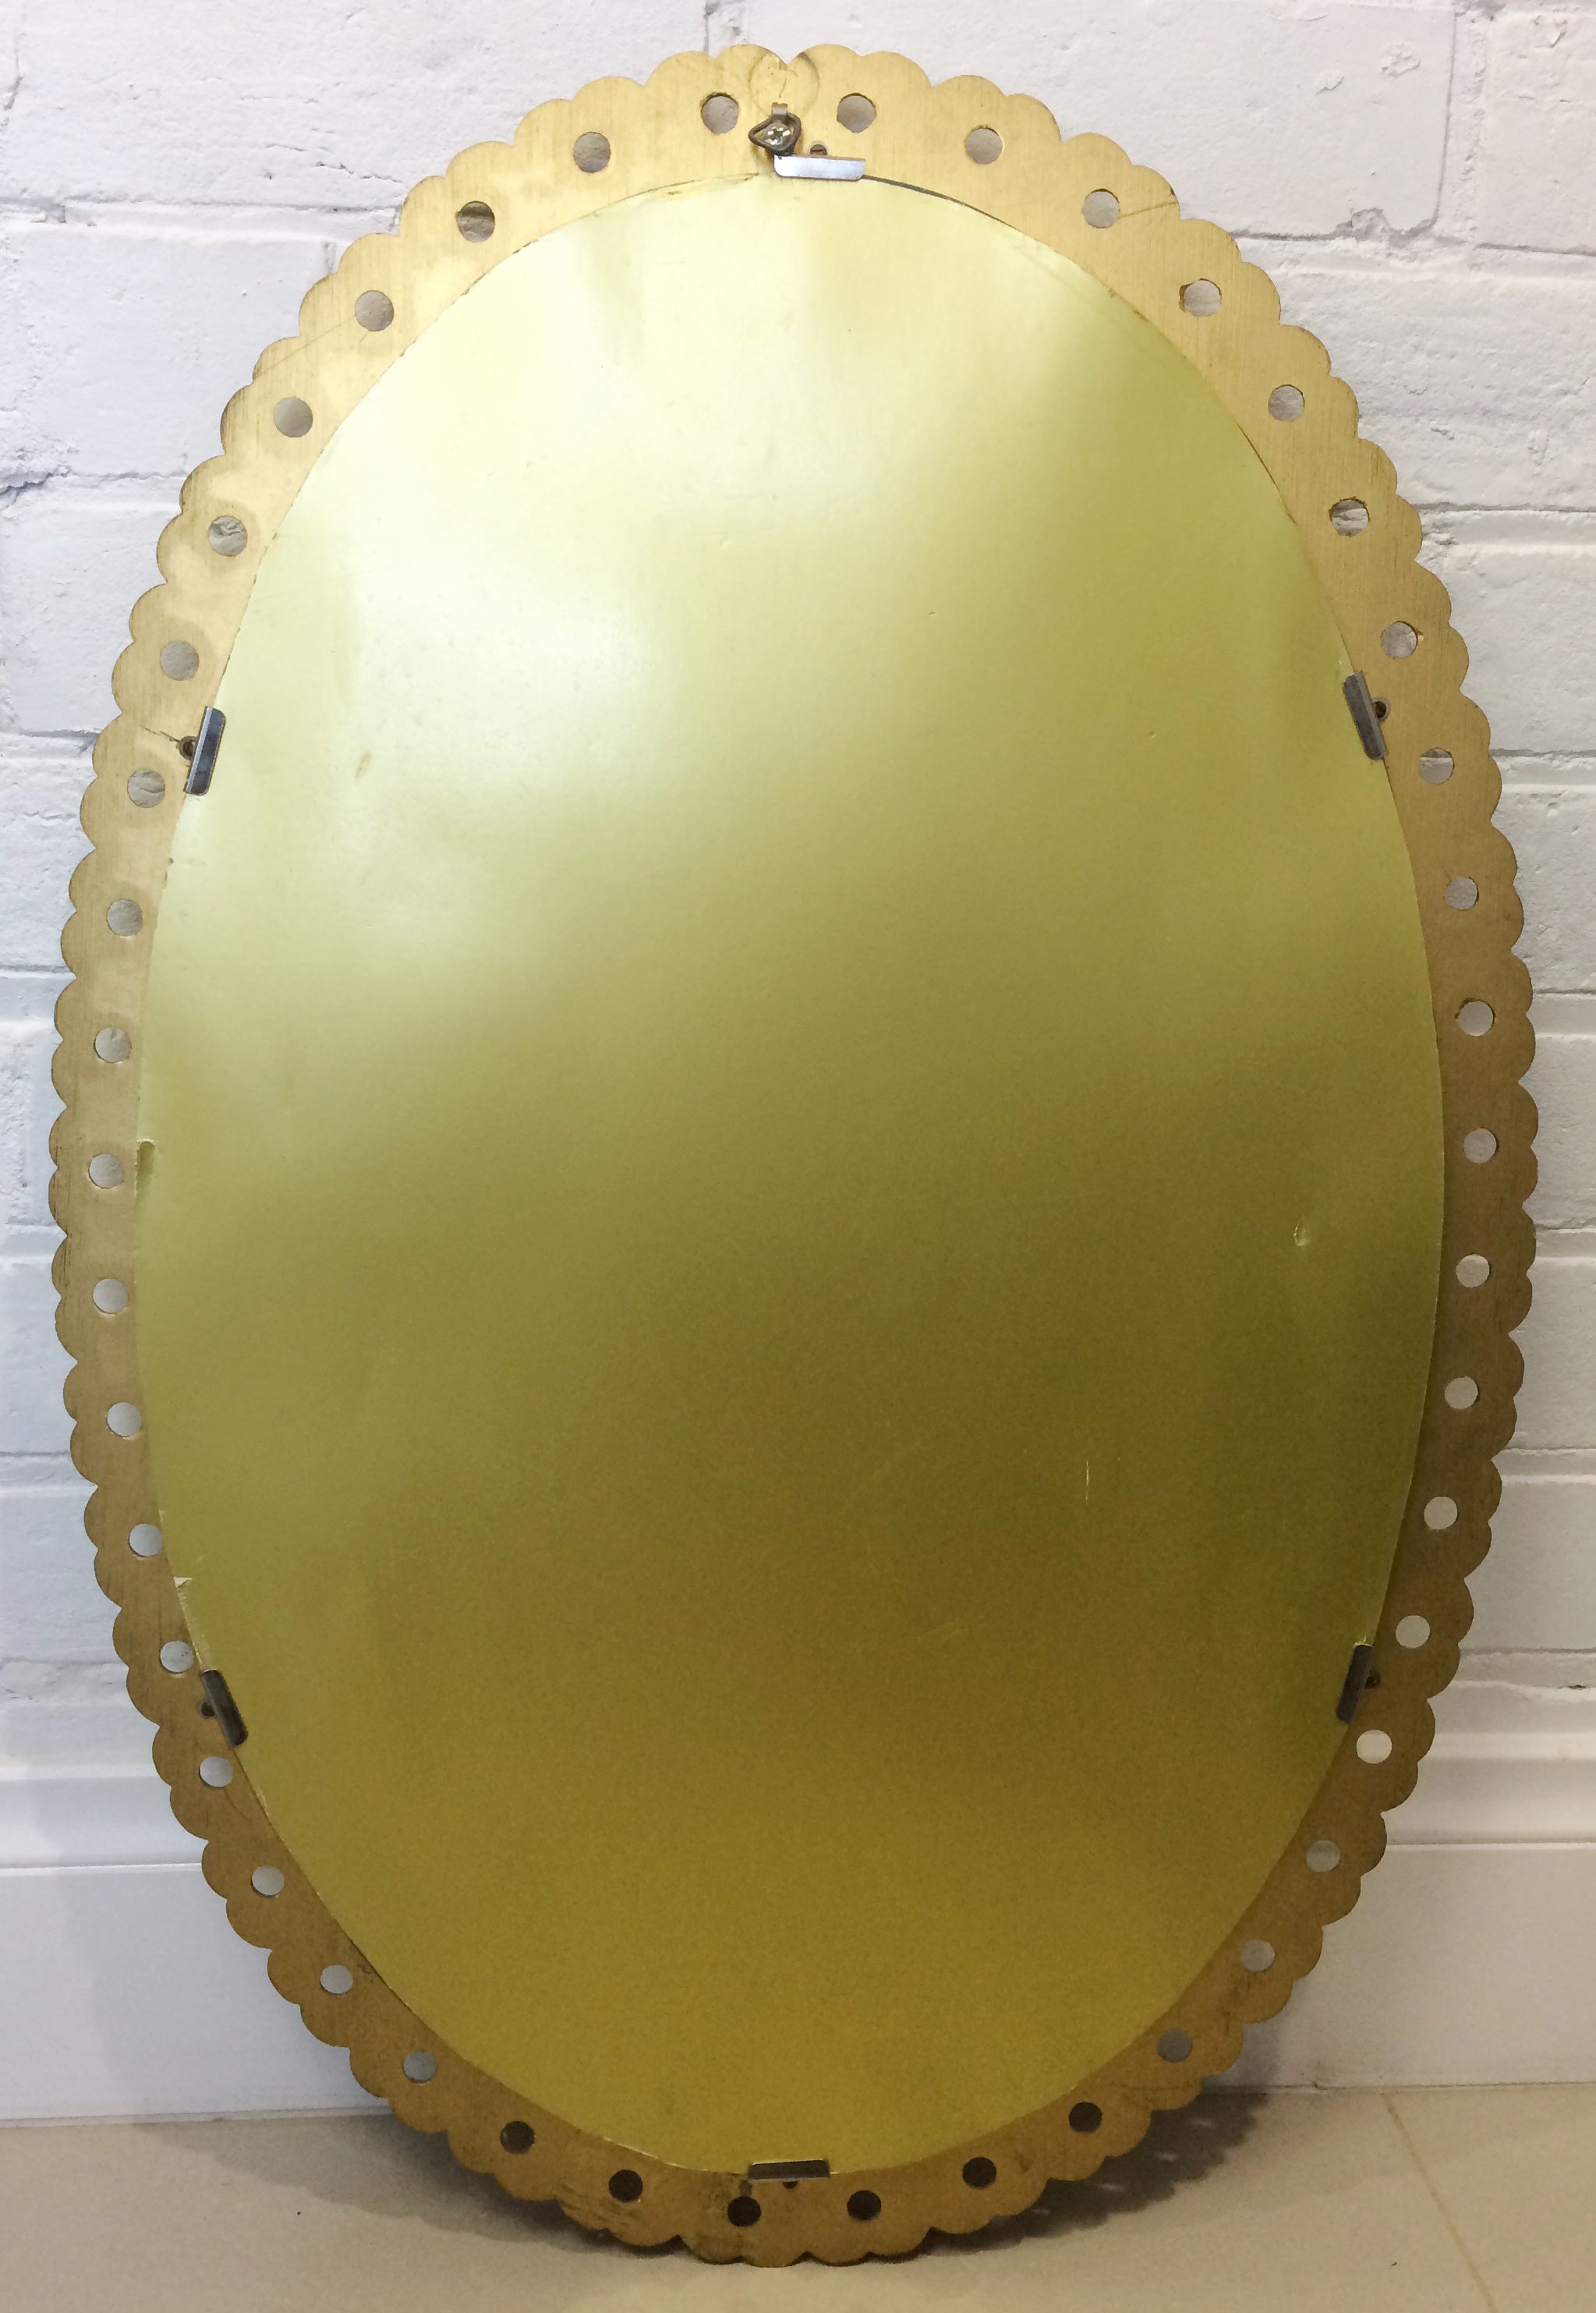 Original Vintage Ornate Gold Oval Mirror | eXibit collection